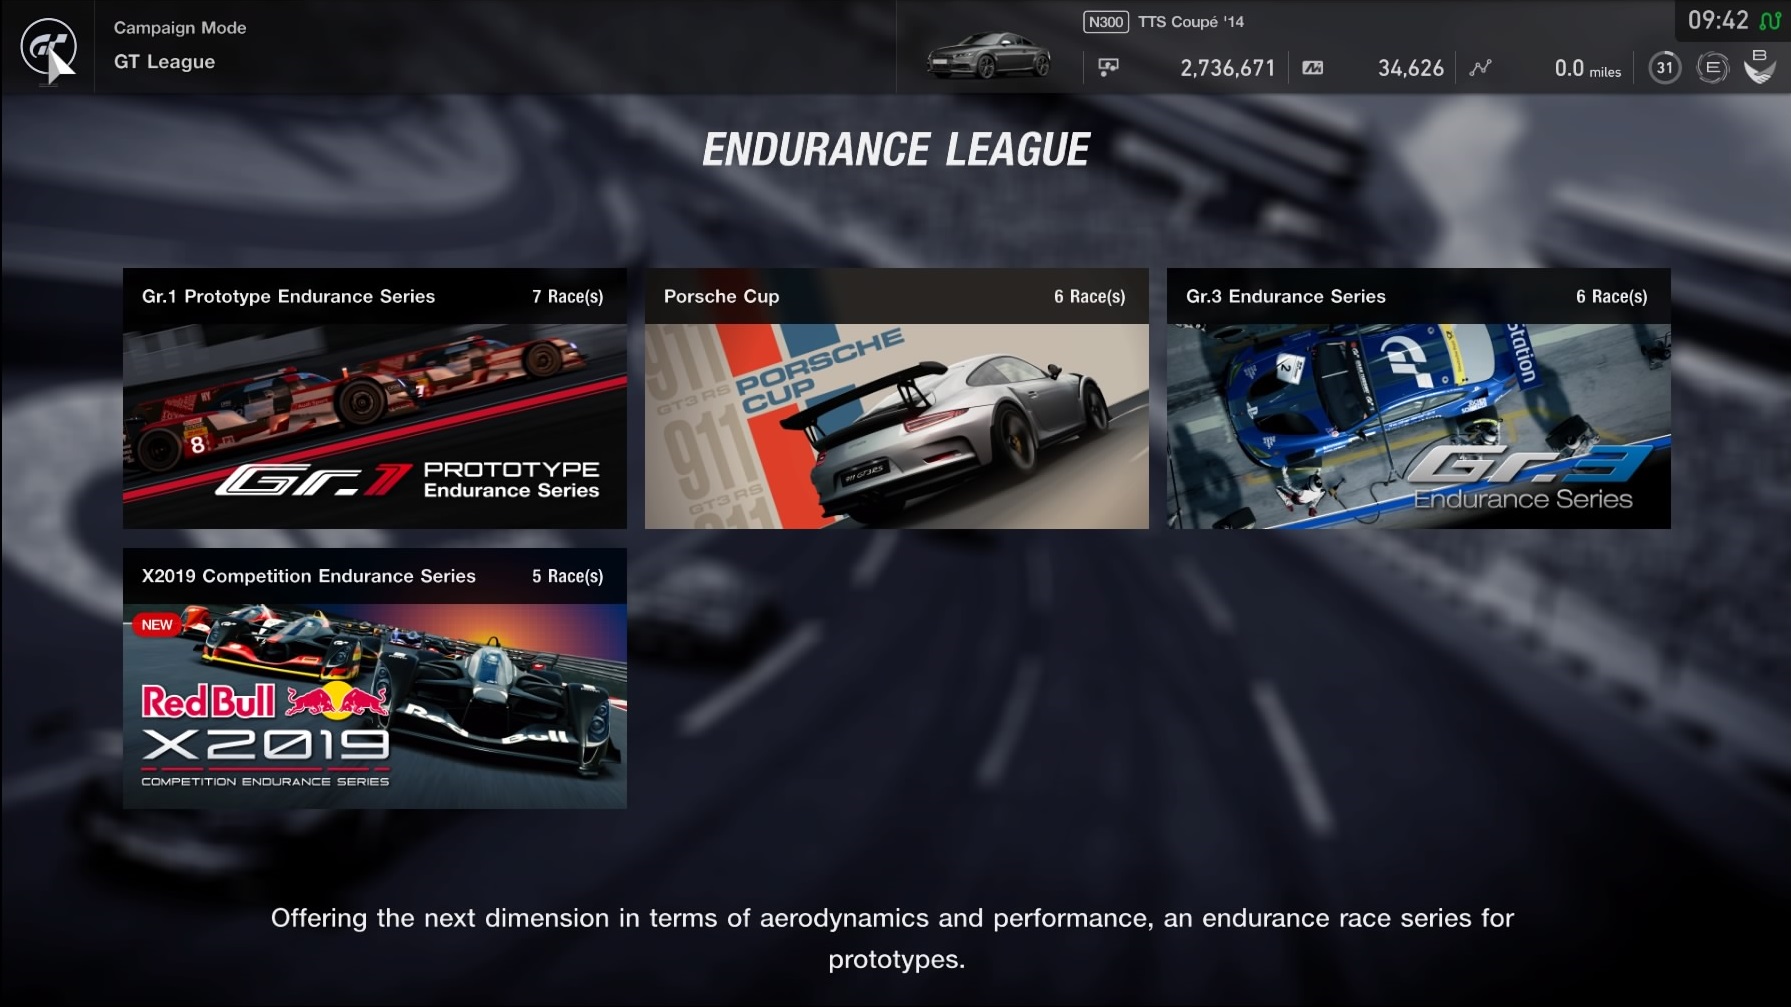 Gran Turismo racing league advertising